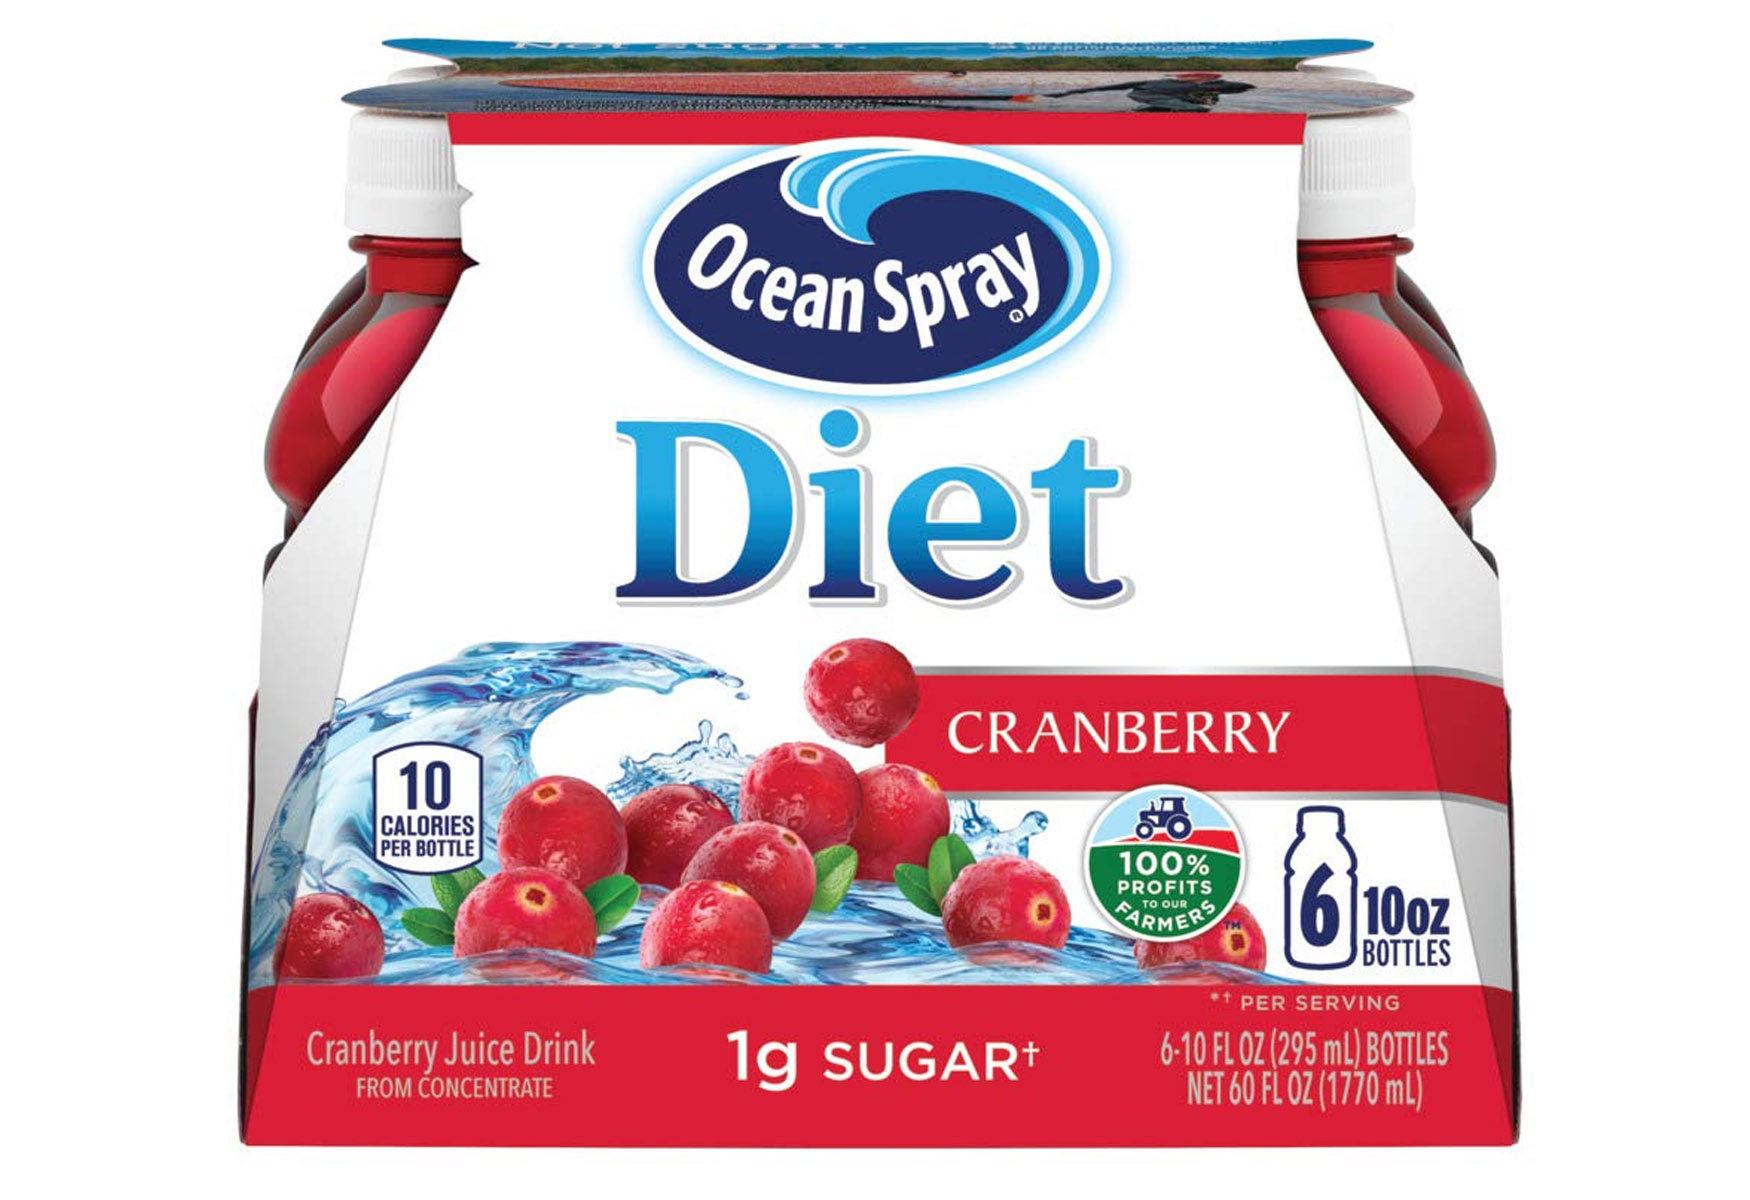 15-ocean-spray-diet-cranberry-juice-nutrition-facts